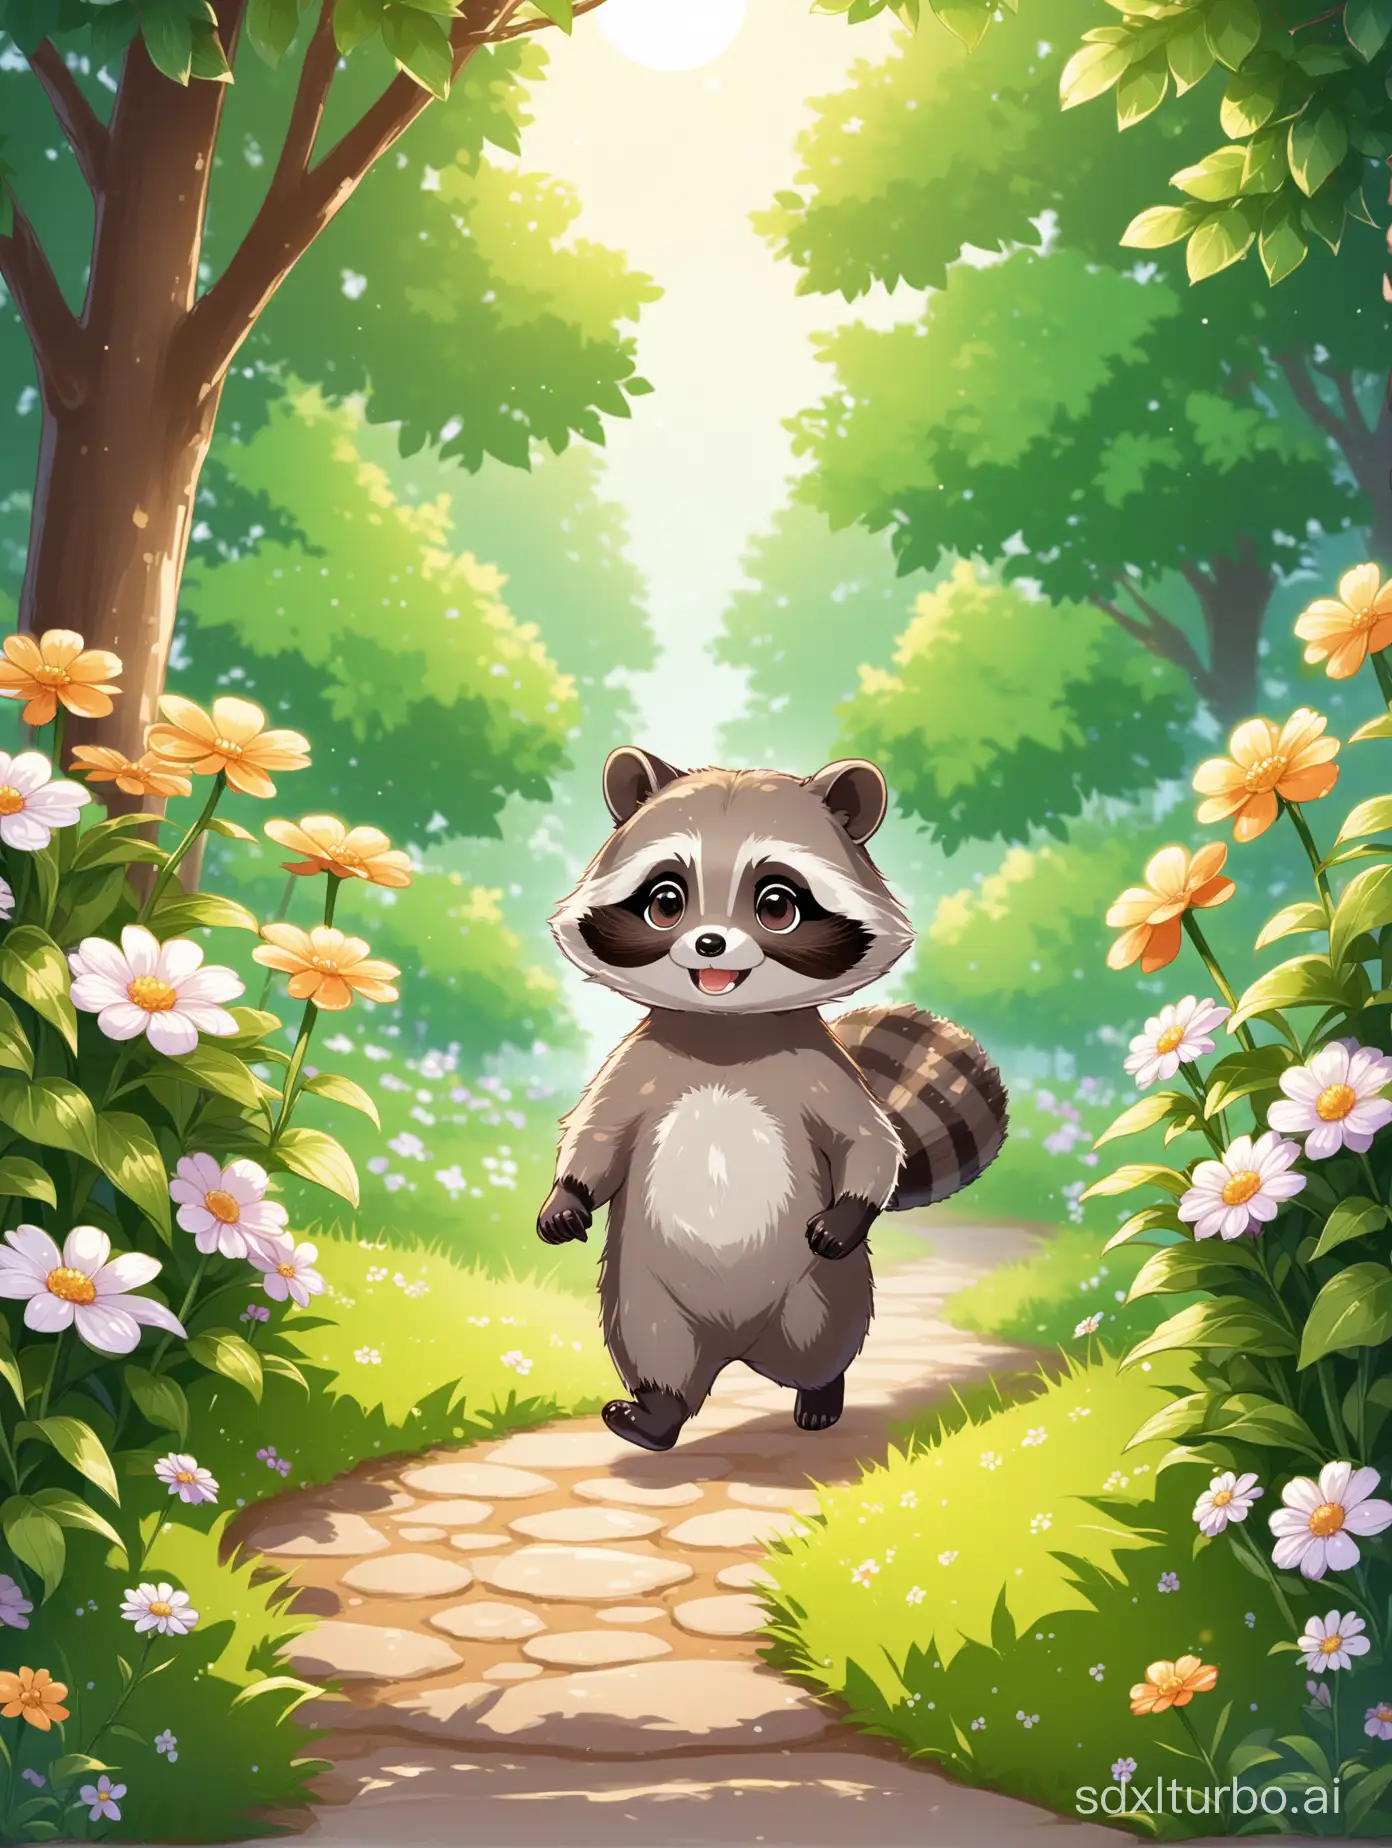 Garden-Exploration-Curious-Raccoon-Strolling-Amidst-Natures-Beauty